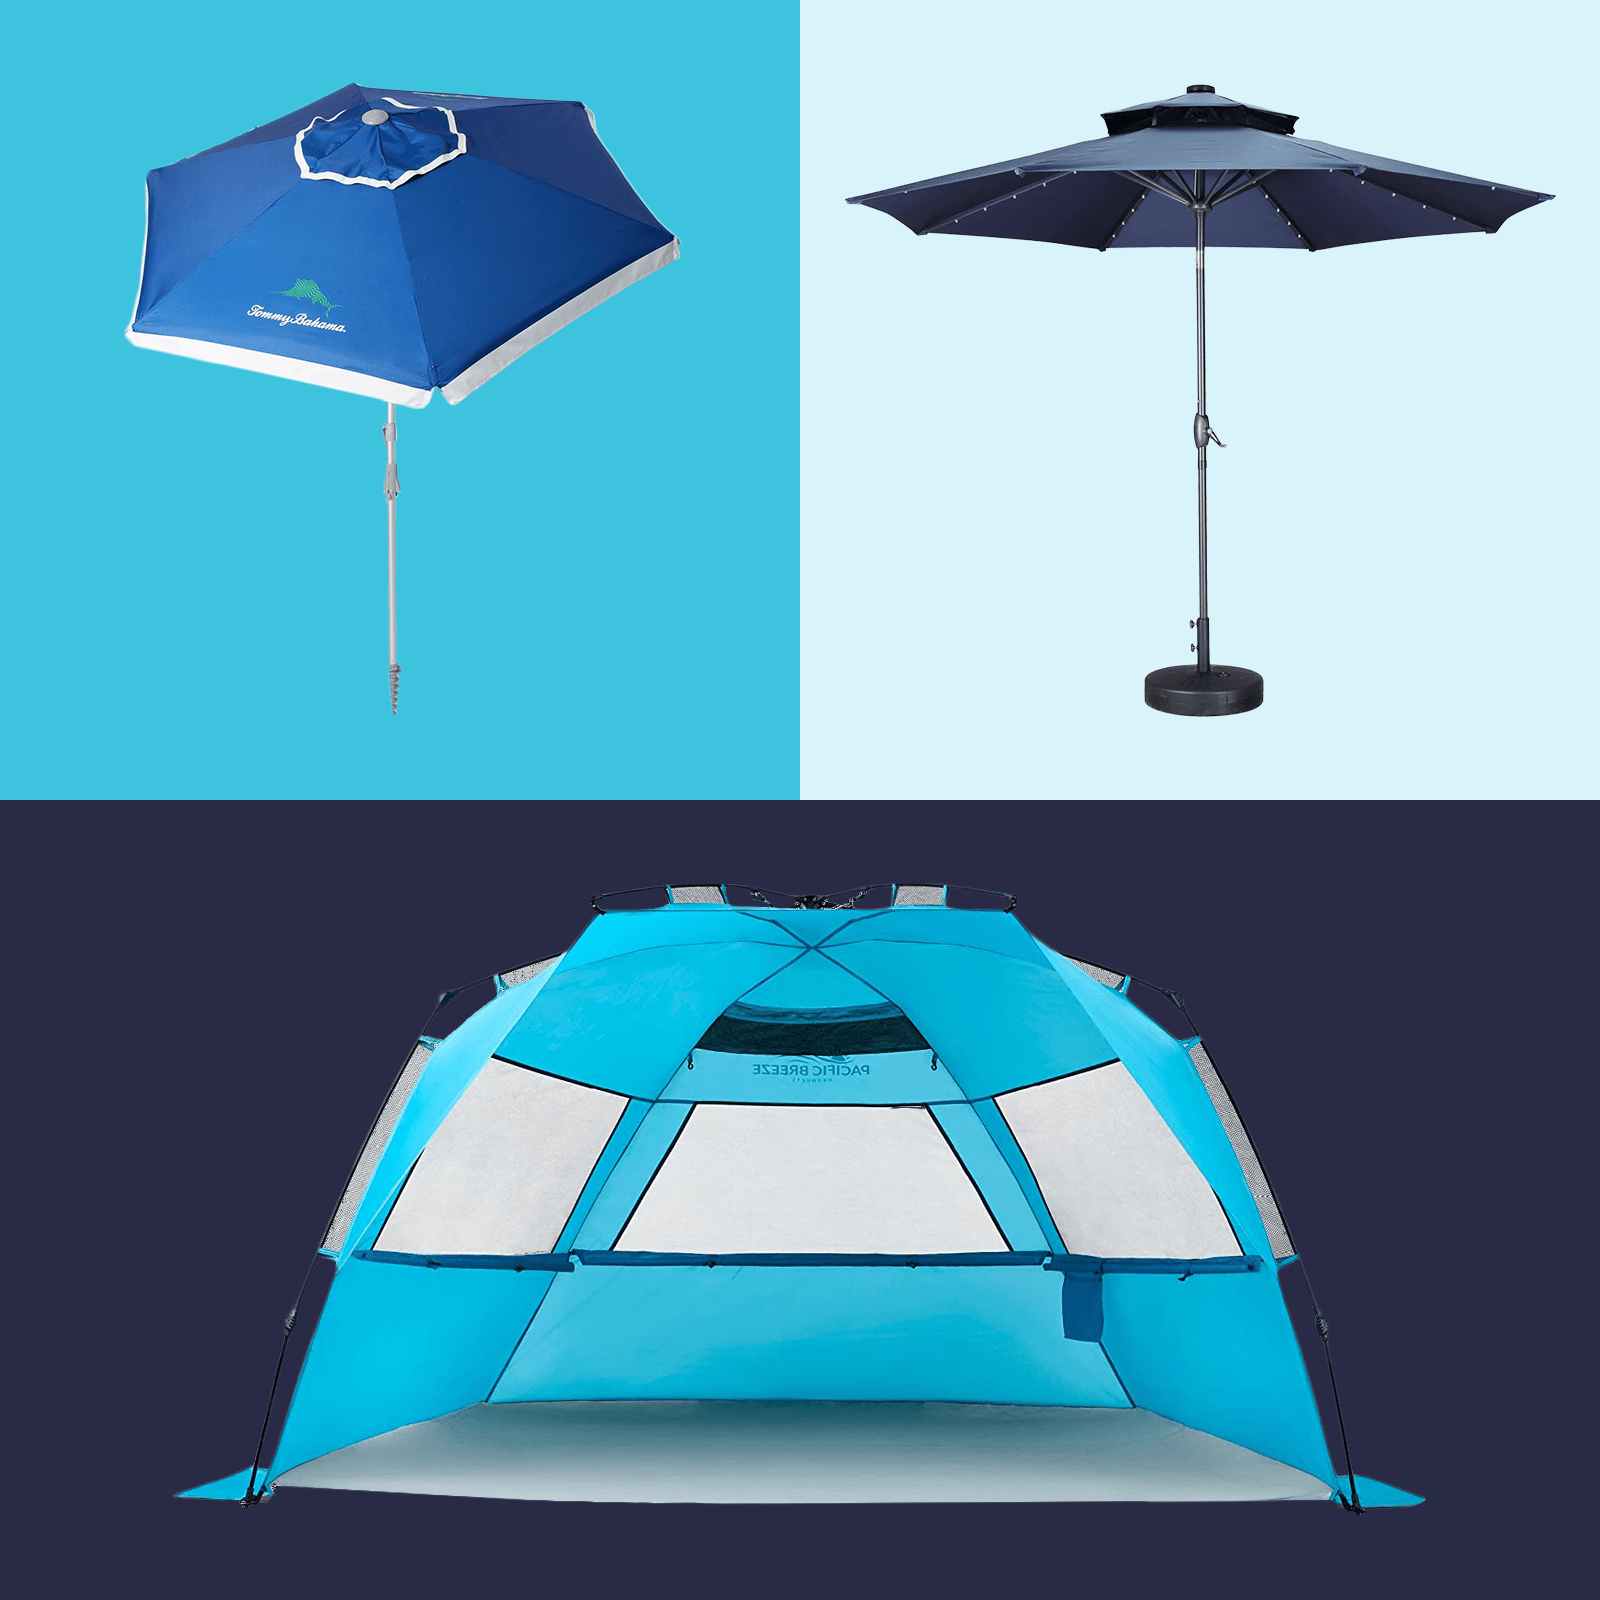 The 11 Best Beach Umbrellas for Summer That Won’t Blow Away